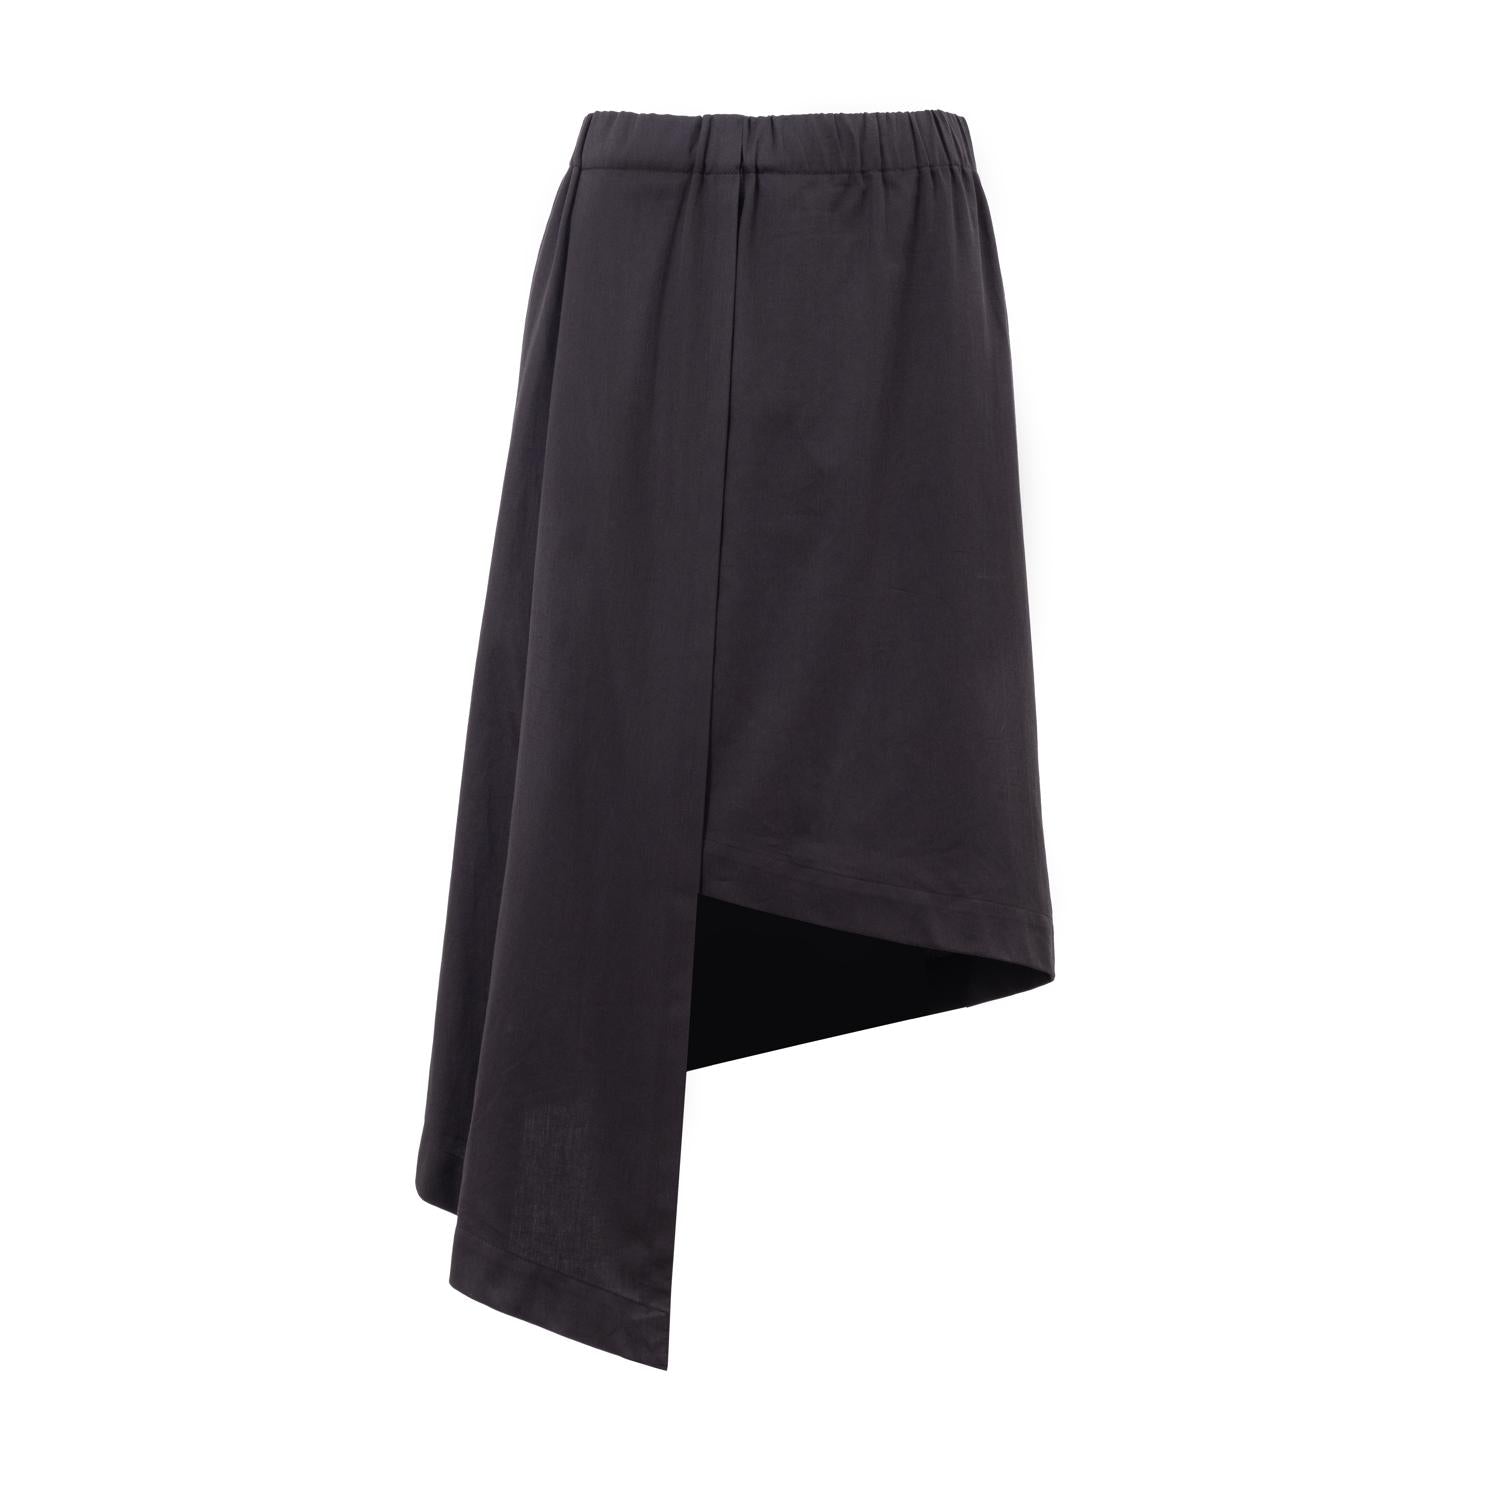 Asymmetrical skirt in black made of organic cotton